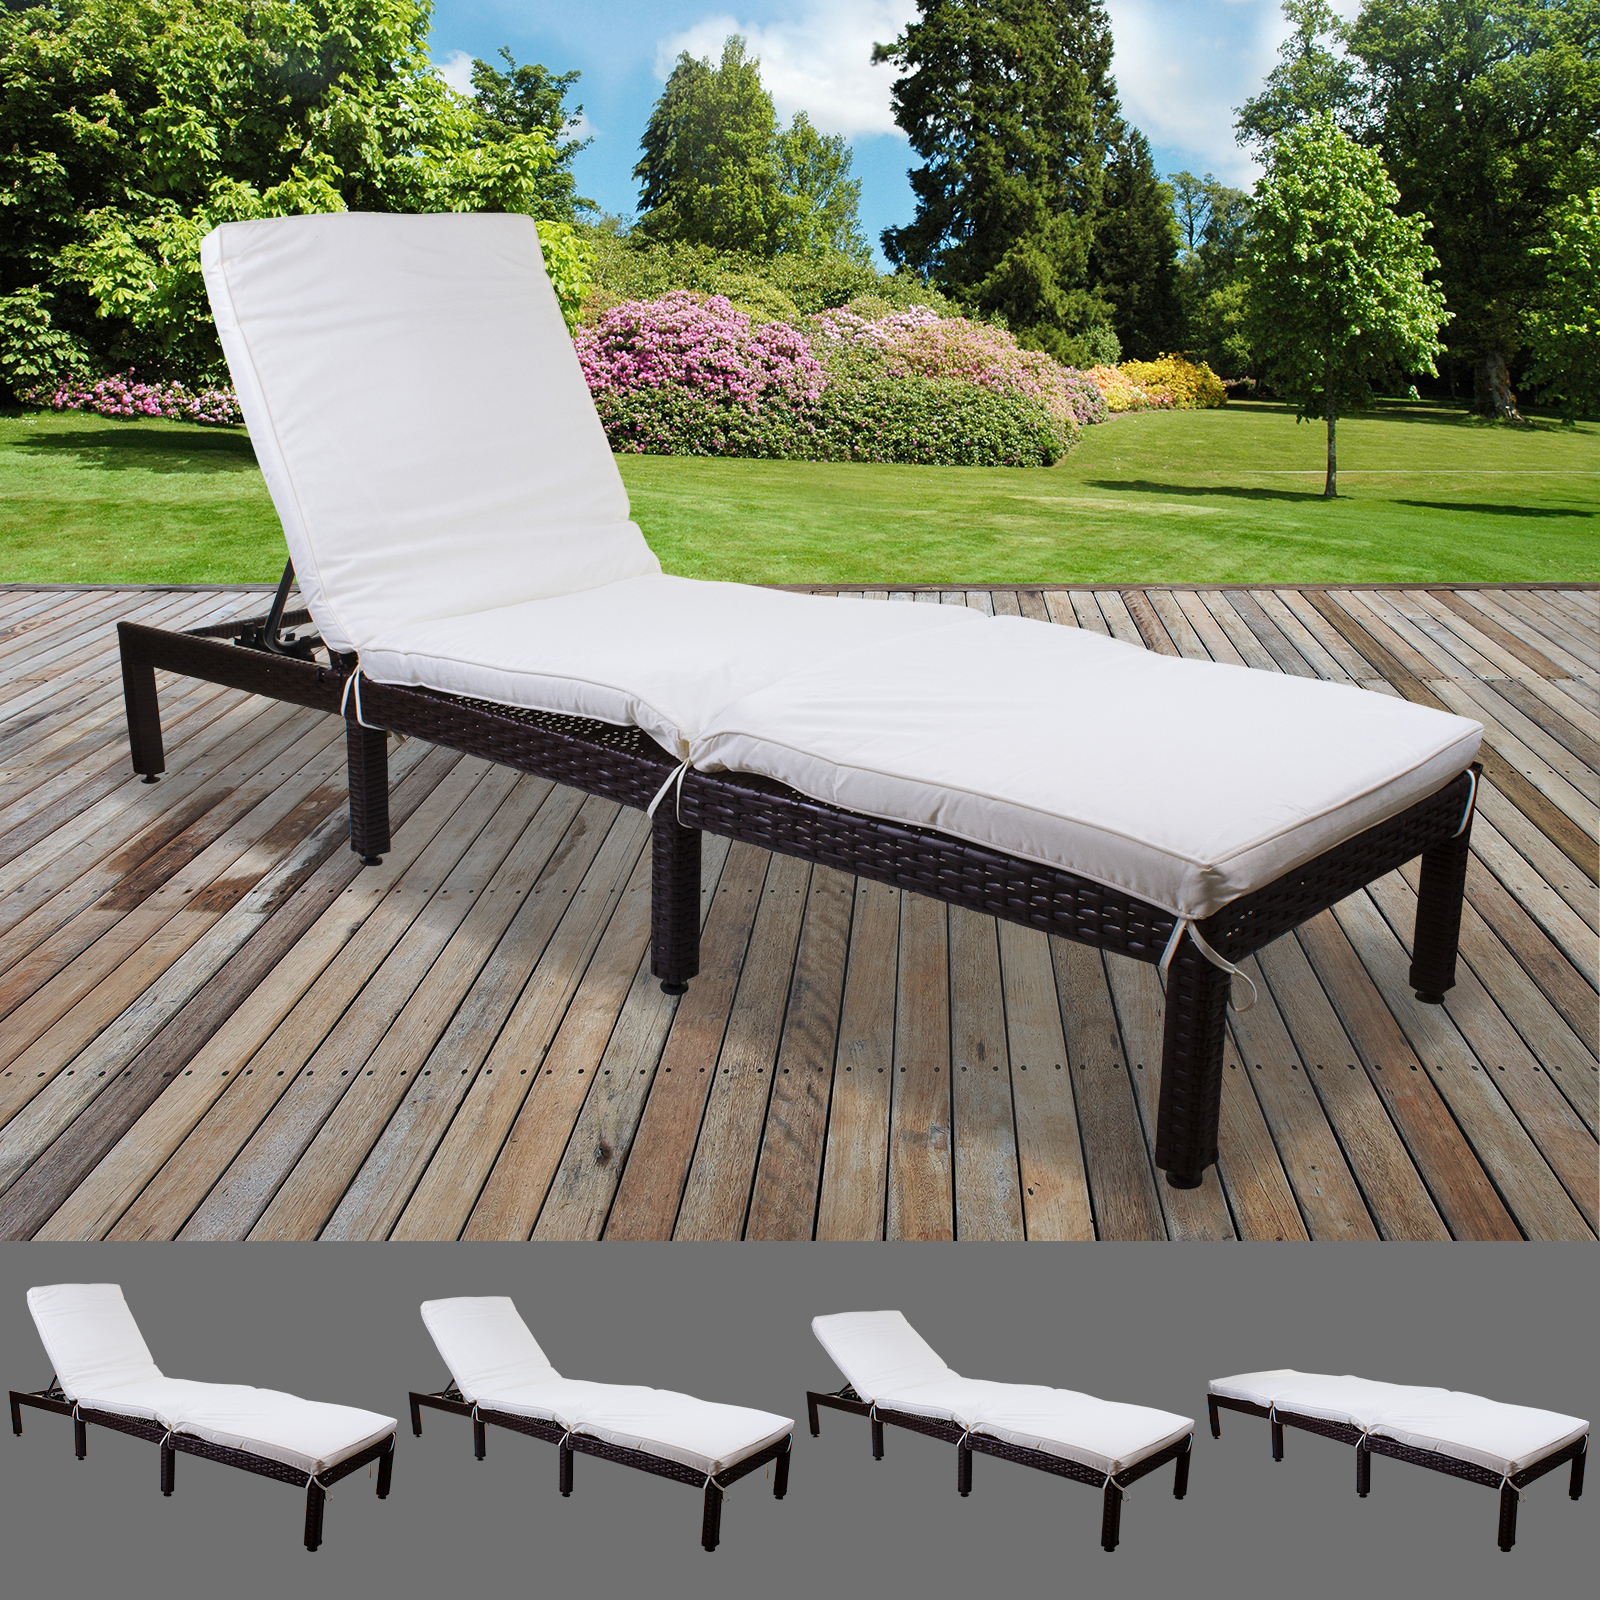 details about cream rattan sun lounger outdoor garden patio furniture  recliner relaxer day bed